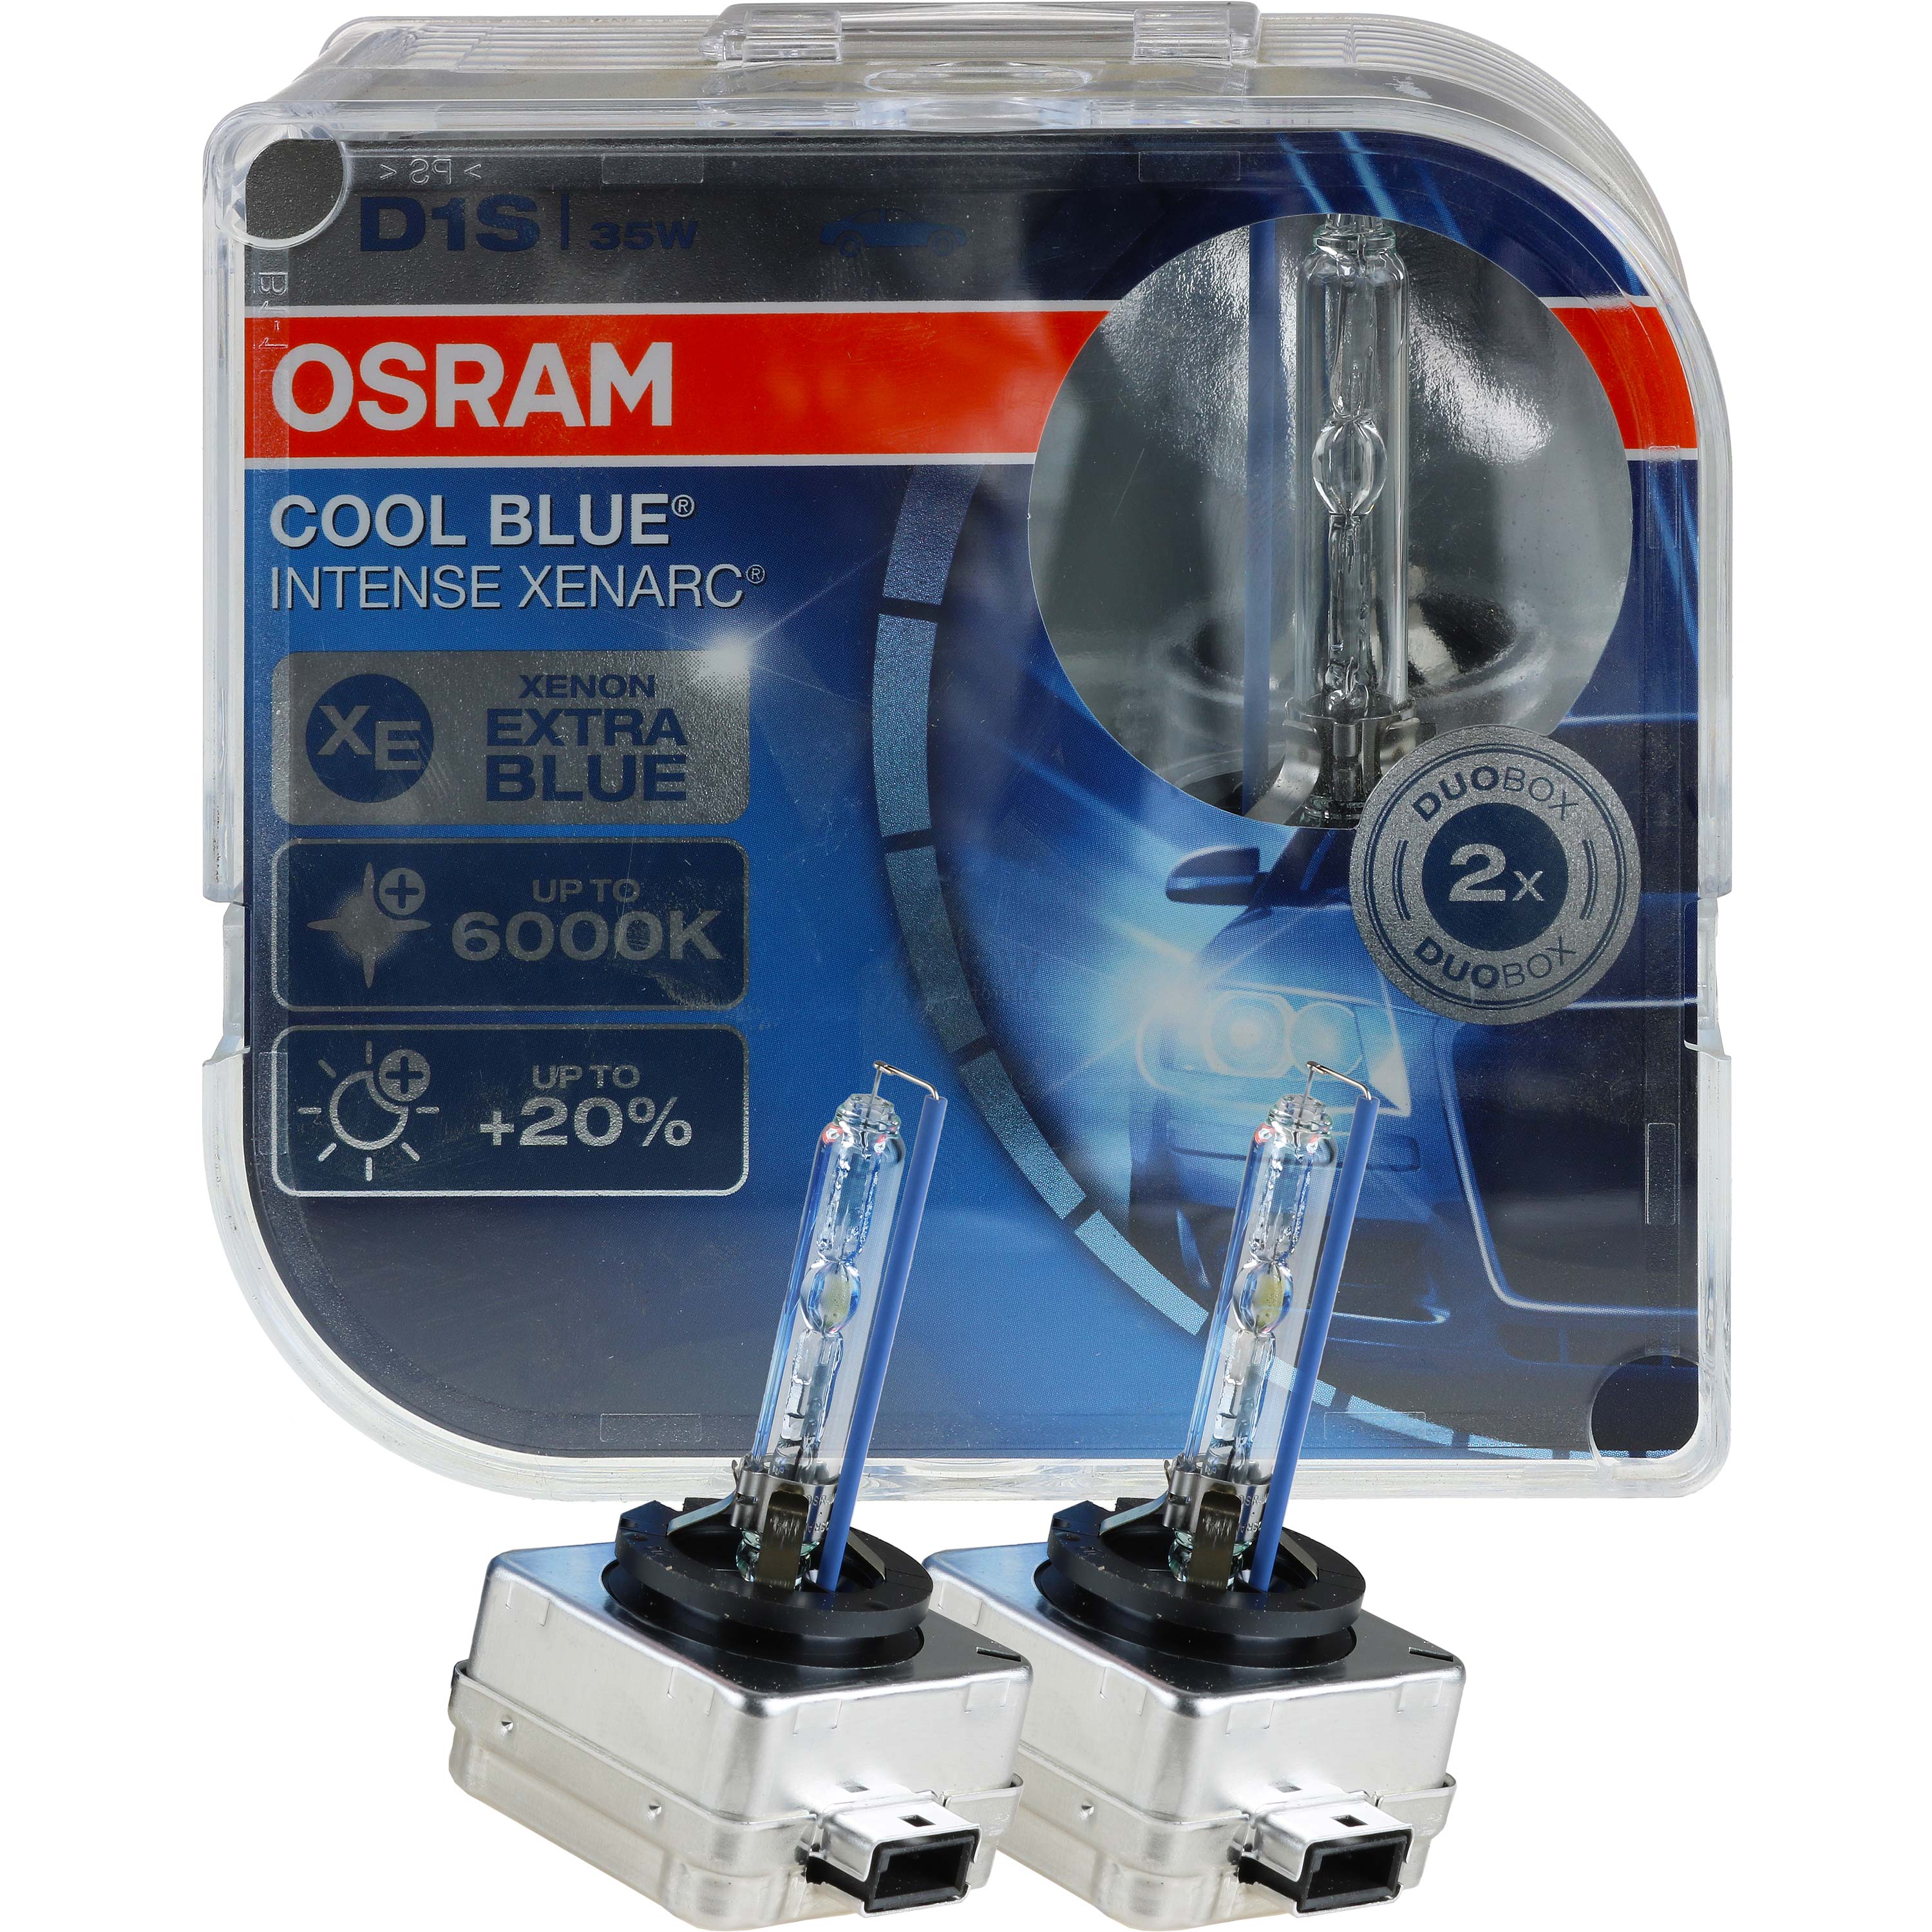 OSRAM Cool Blue Intense Xenarc D1S 35W PK32d-2 Xenon Brenner Lampe